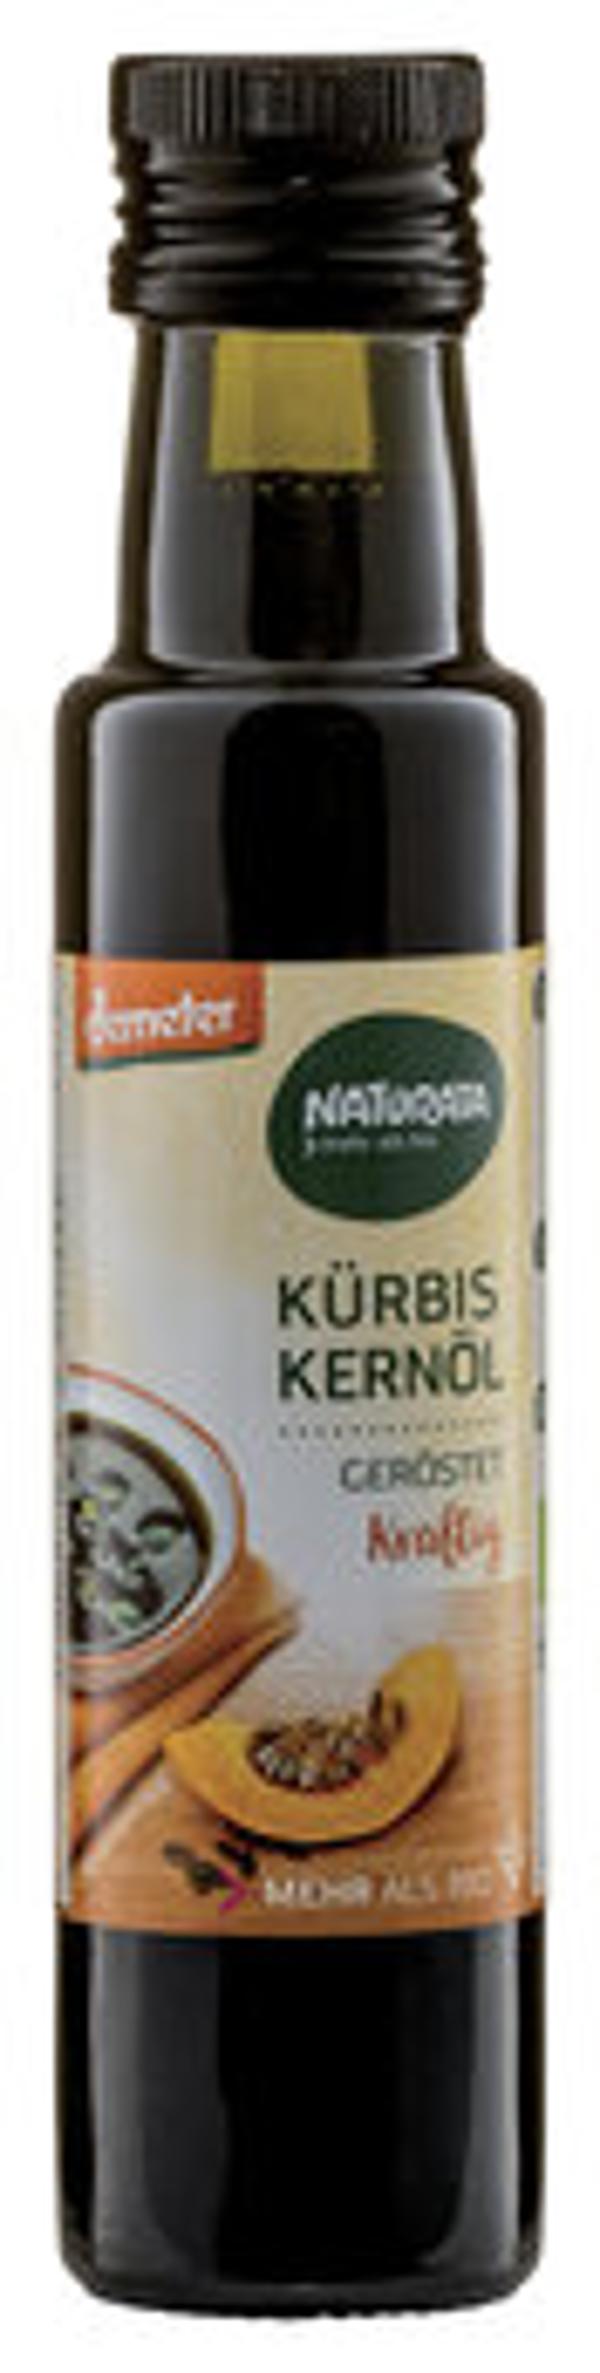 Produktfoto zu Naturata Kürbiskernöl geröstet 100ml